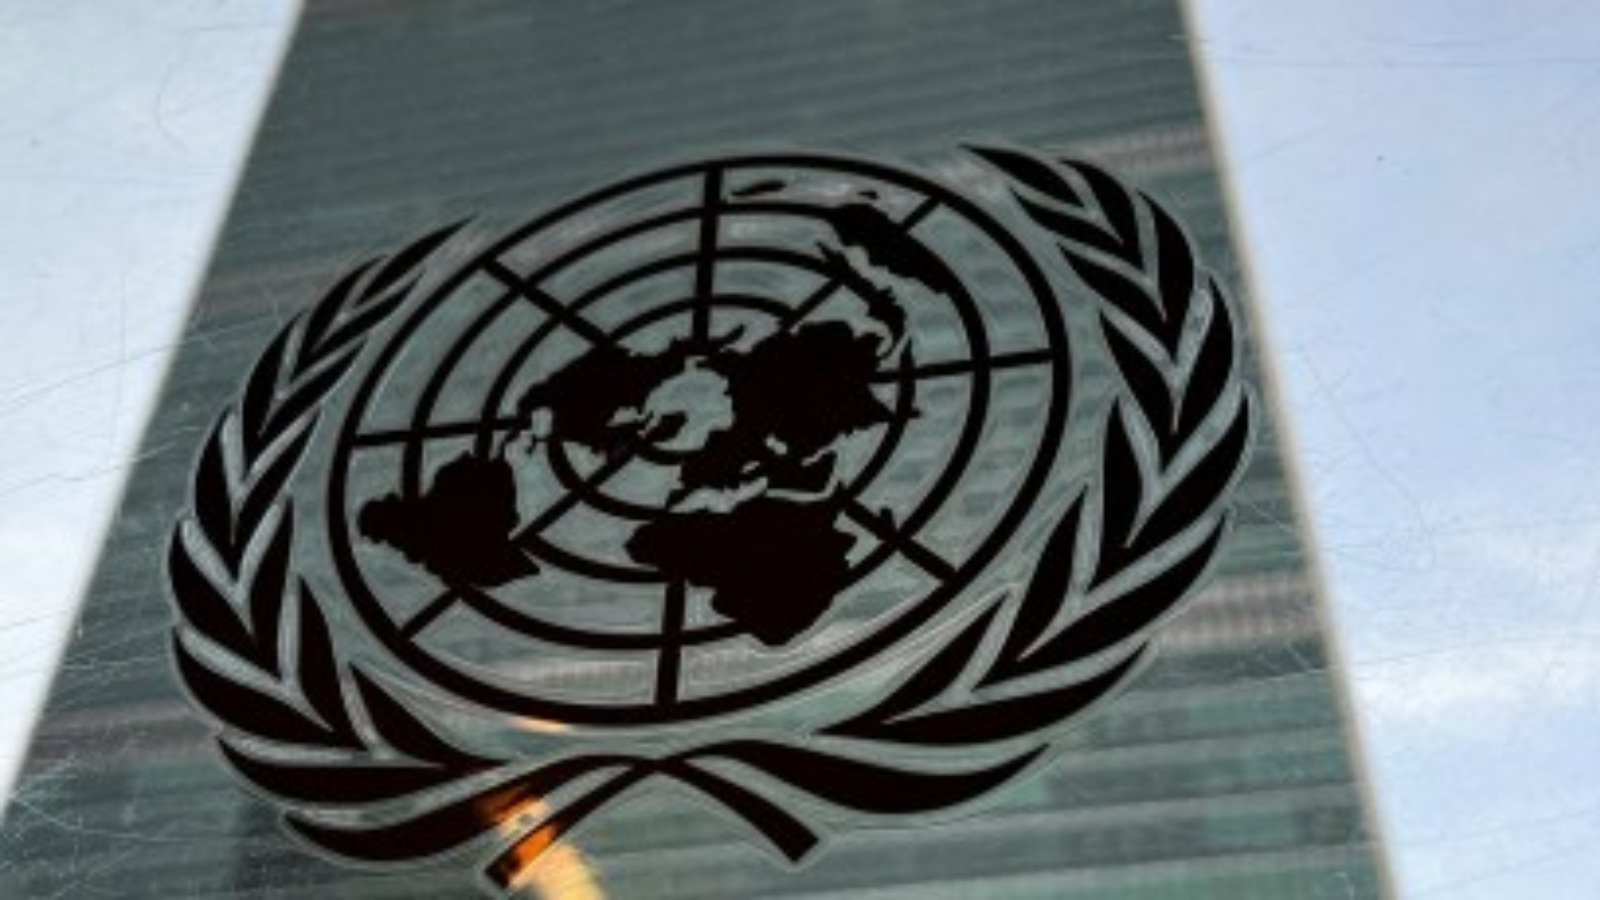 China undergoes rare scrutiny of rights record at UN meeting